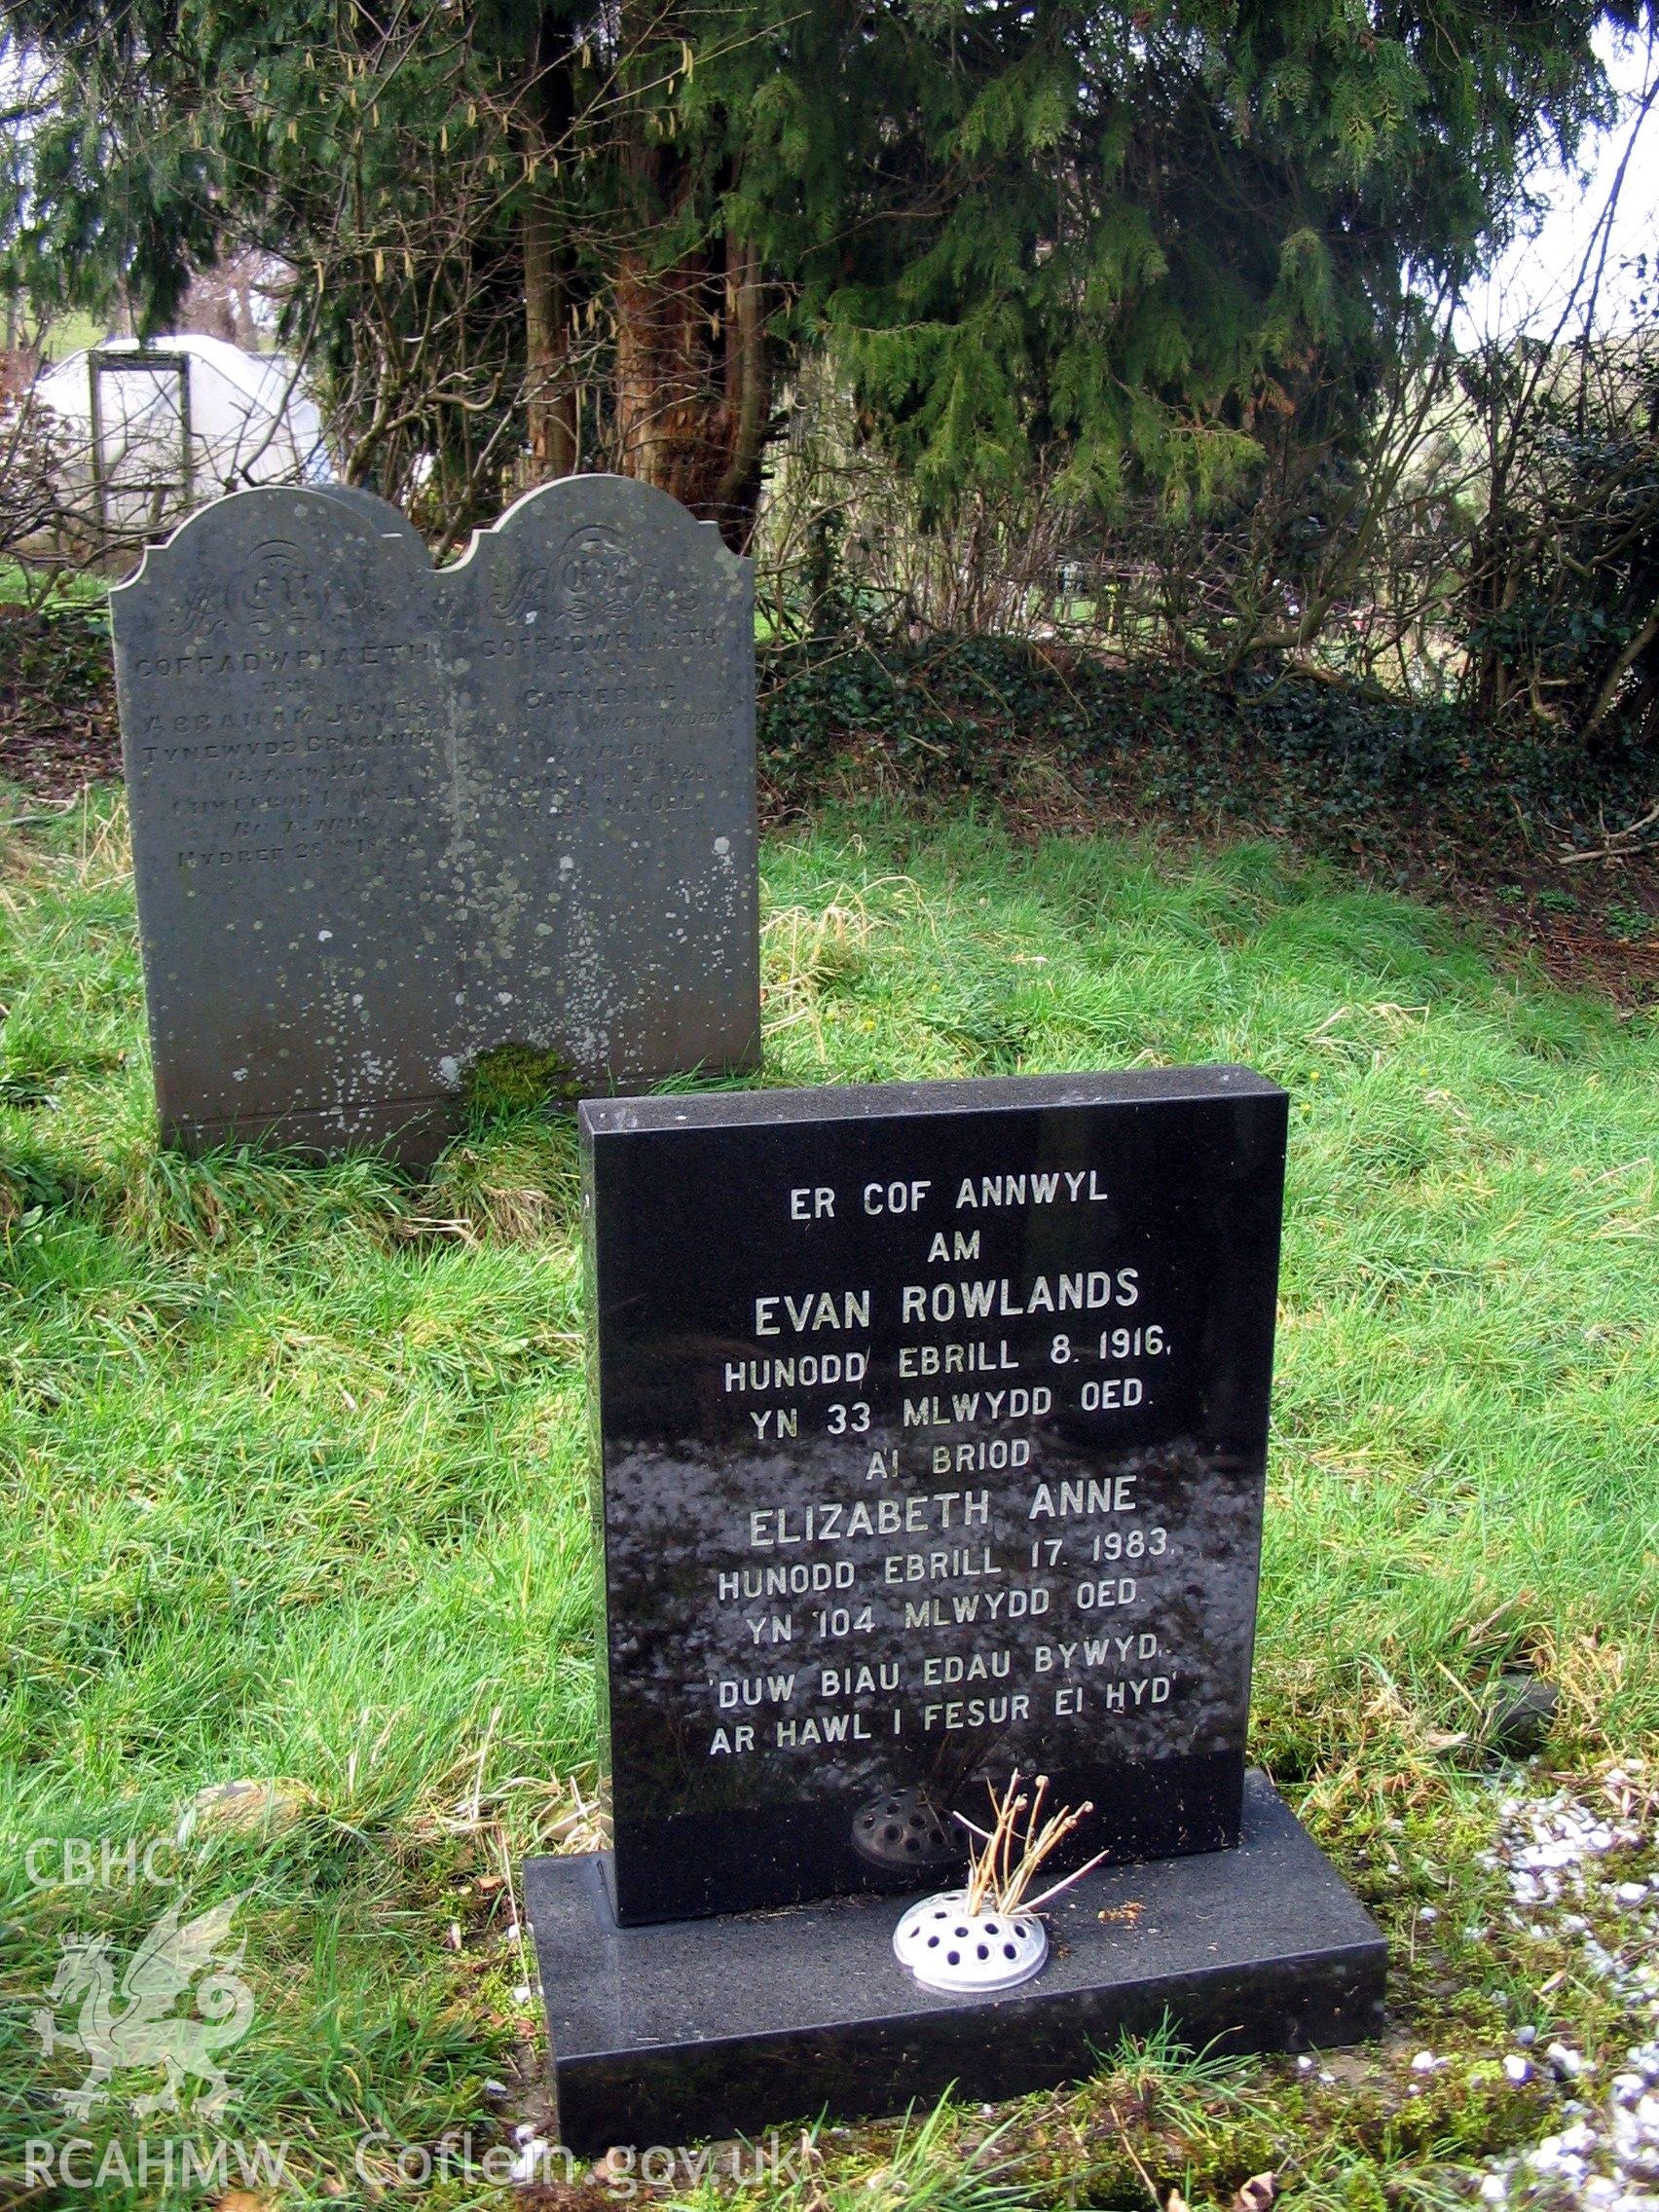 Colour digital photograph showing a gravestone at Salem Welsh Independent Chapel, Trefeurig.